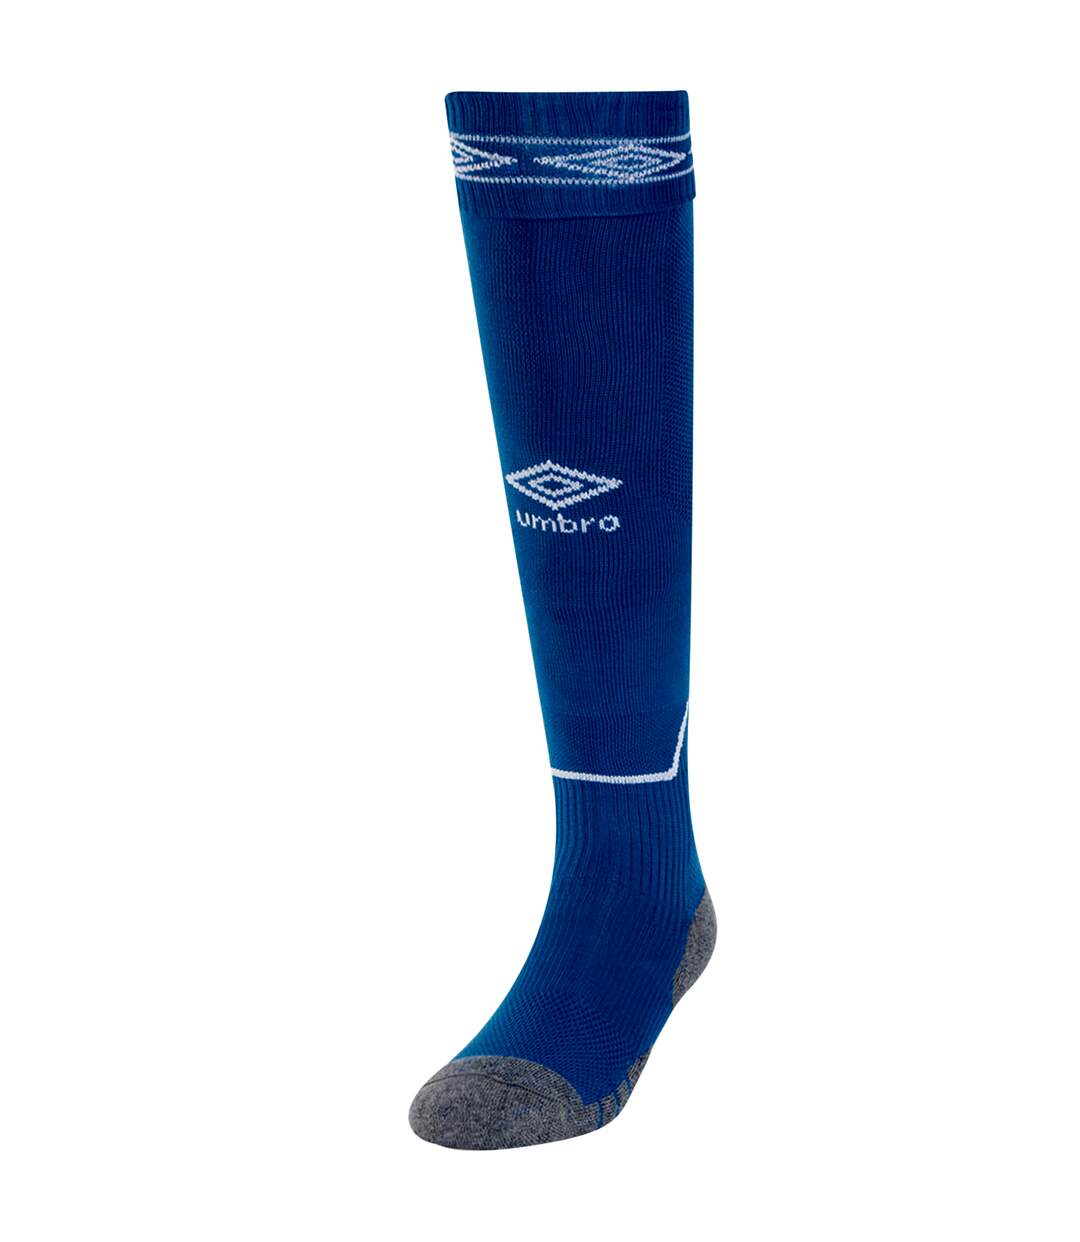 Umbro Diamond Football Socks (Royal Blue/White)